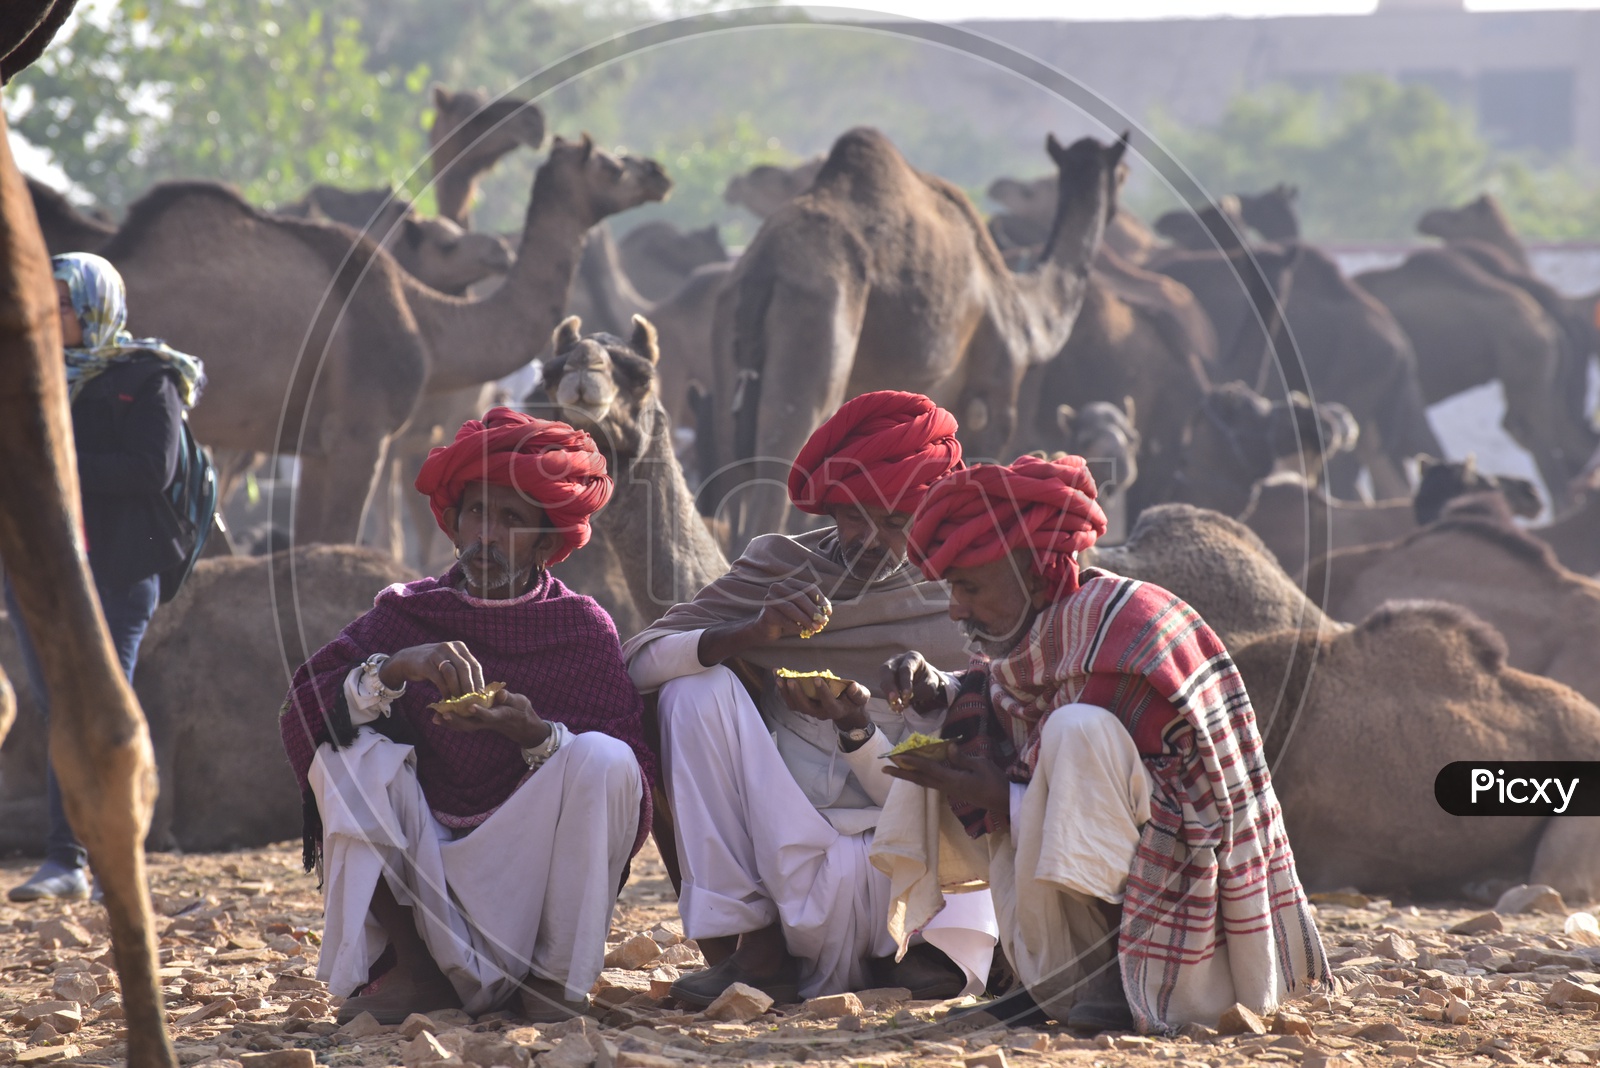 Rajasthani Men in Traditional Attire